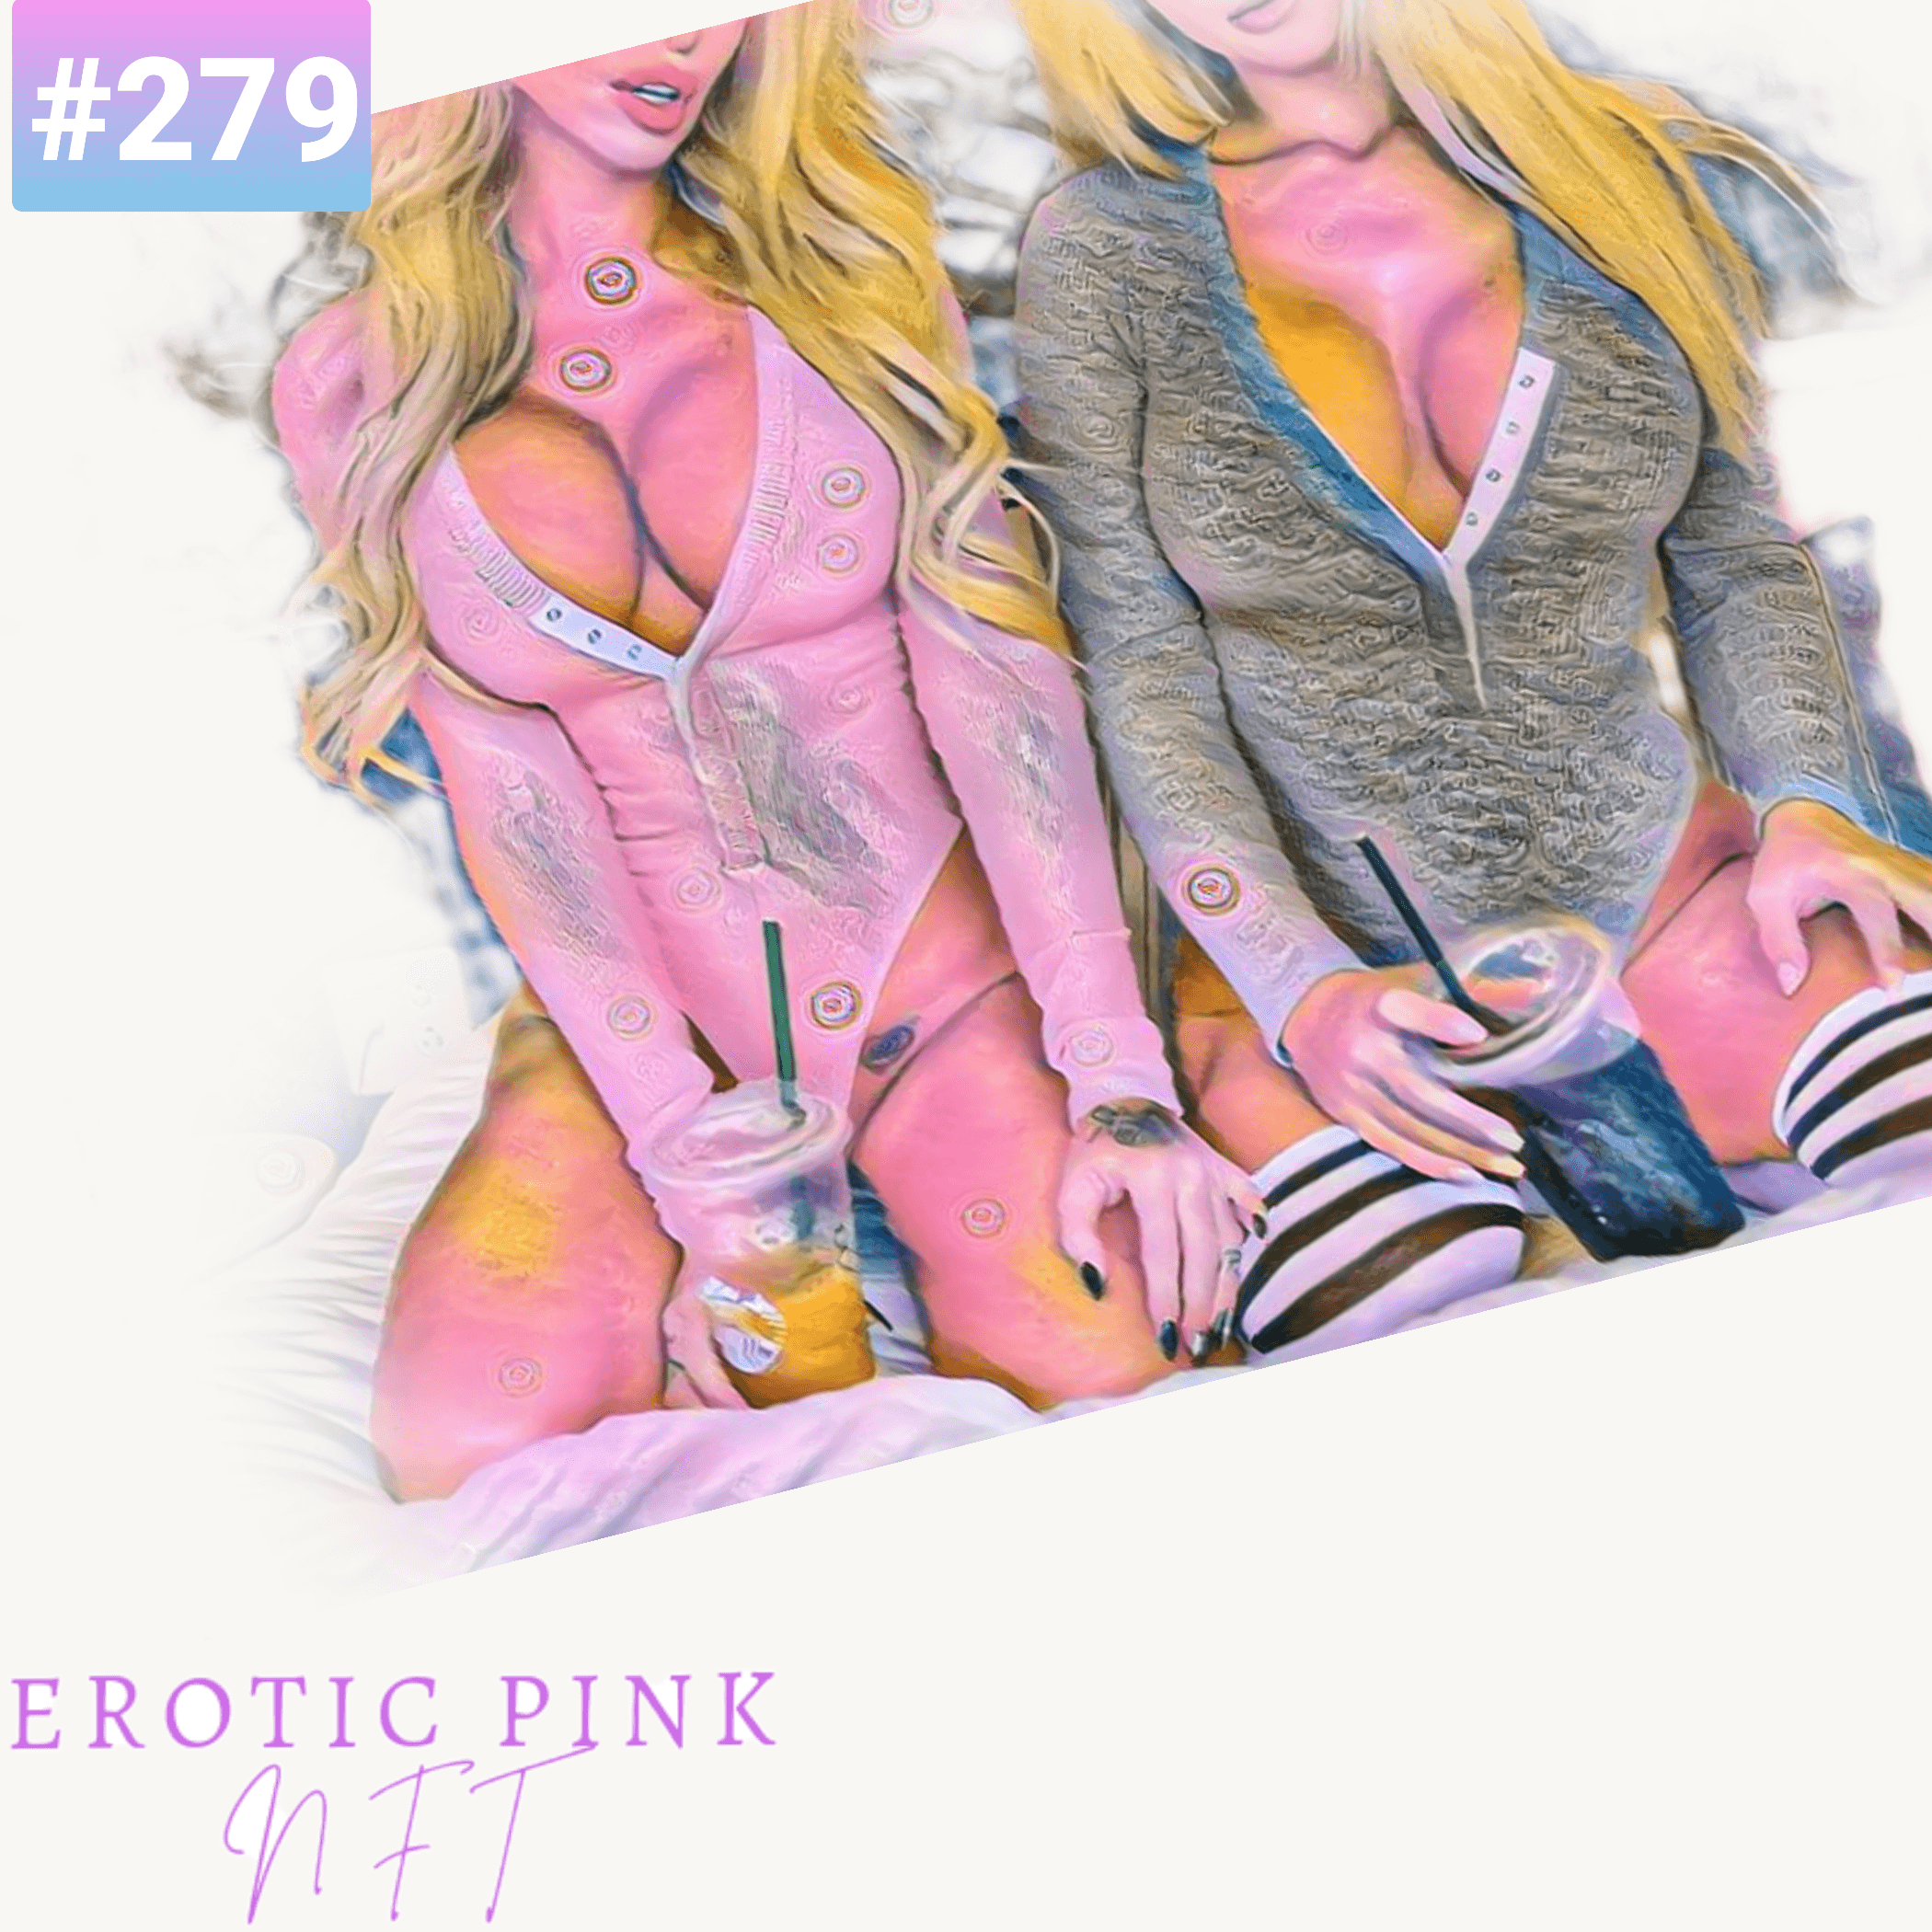 Erotic Pink #279